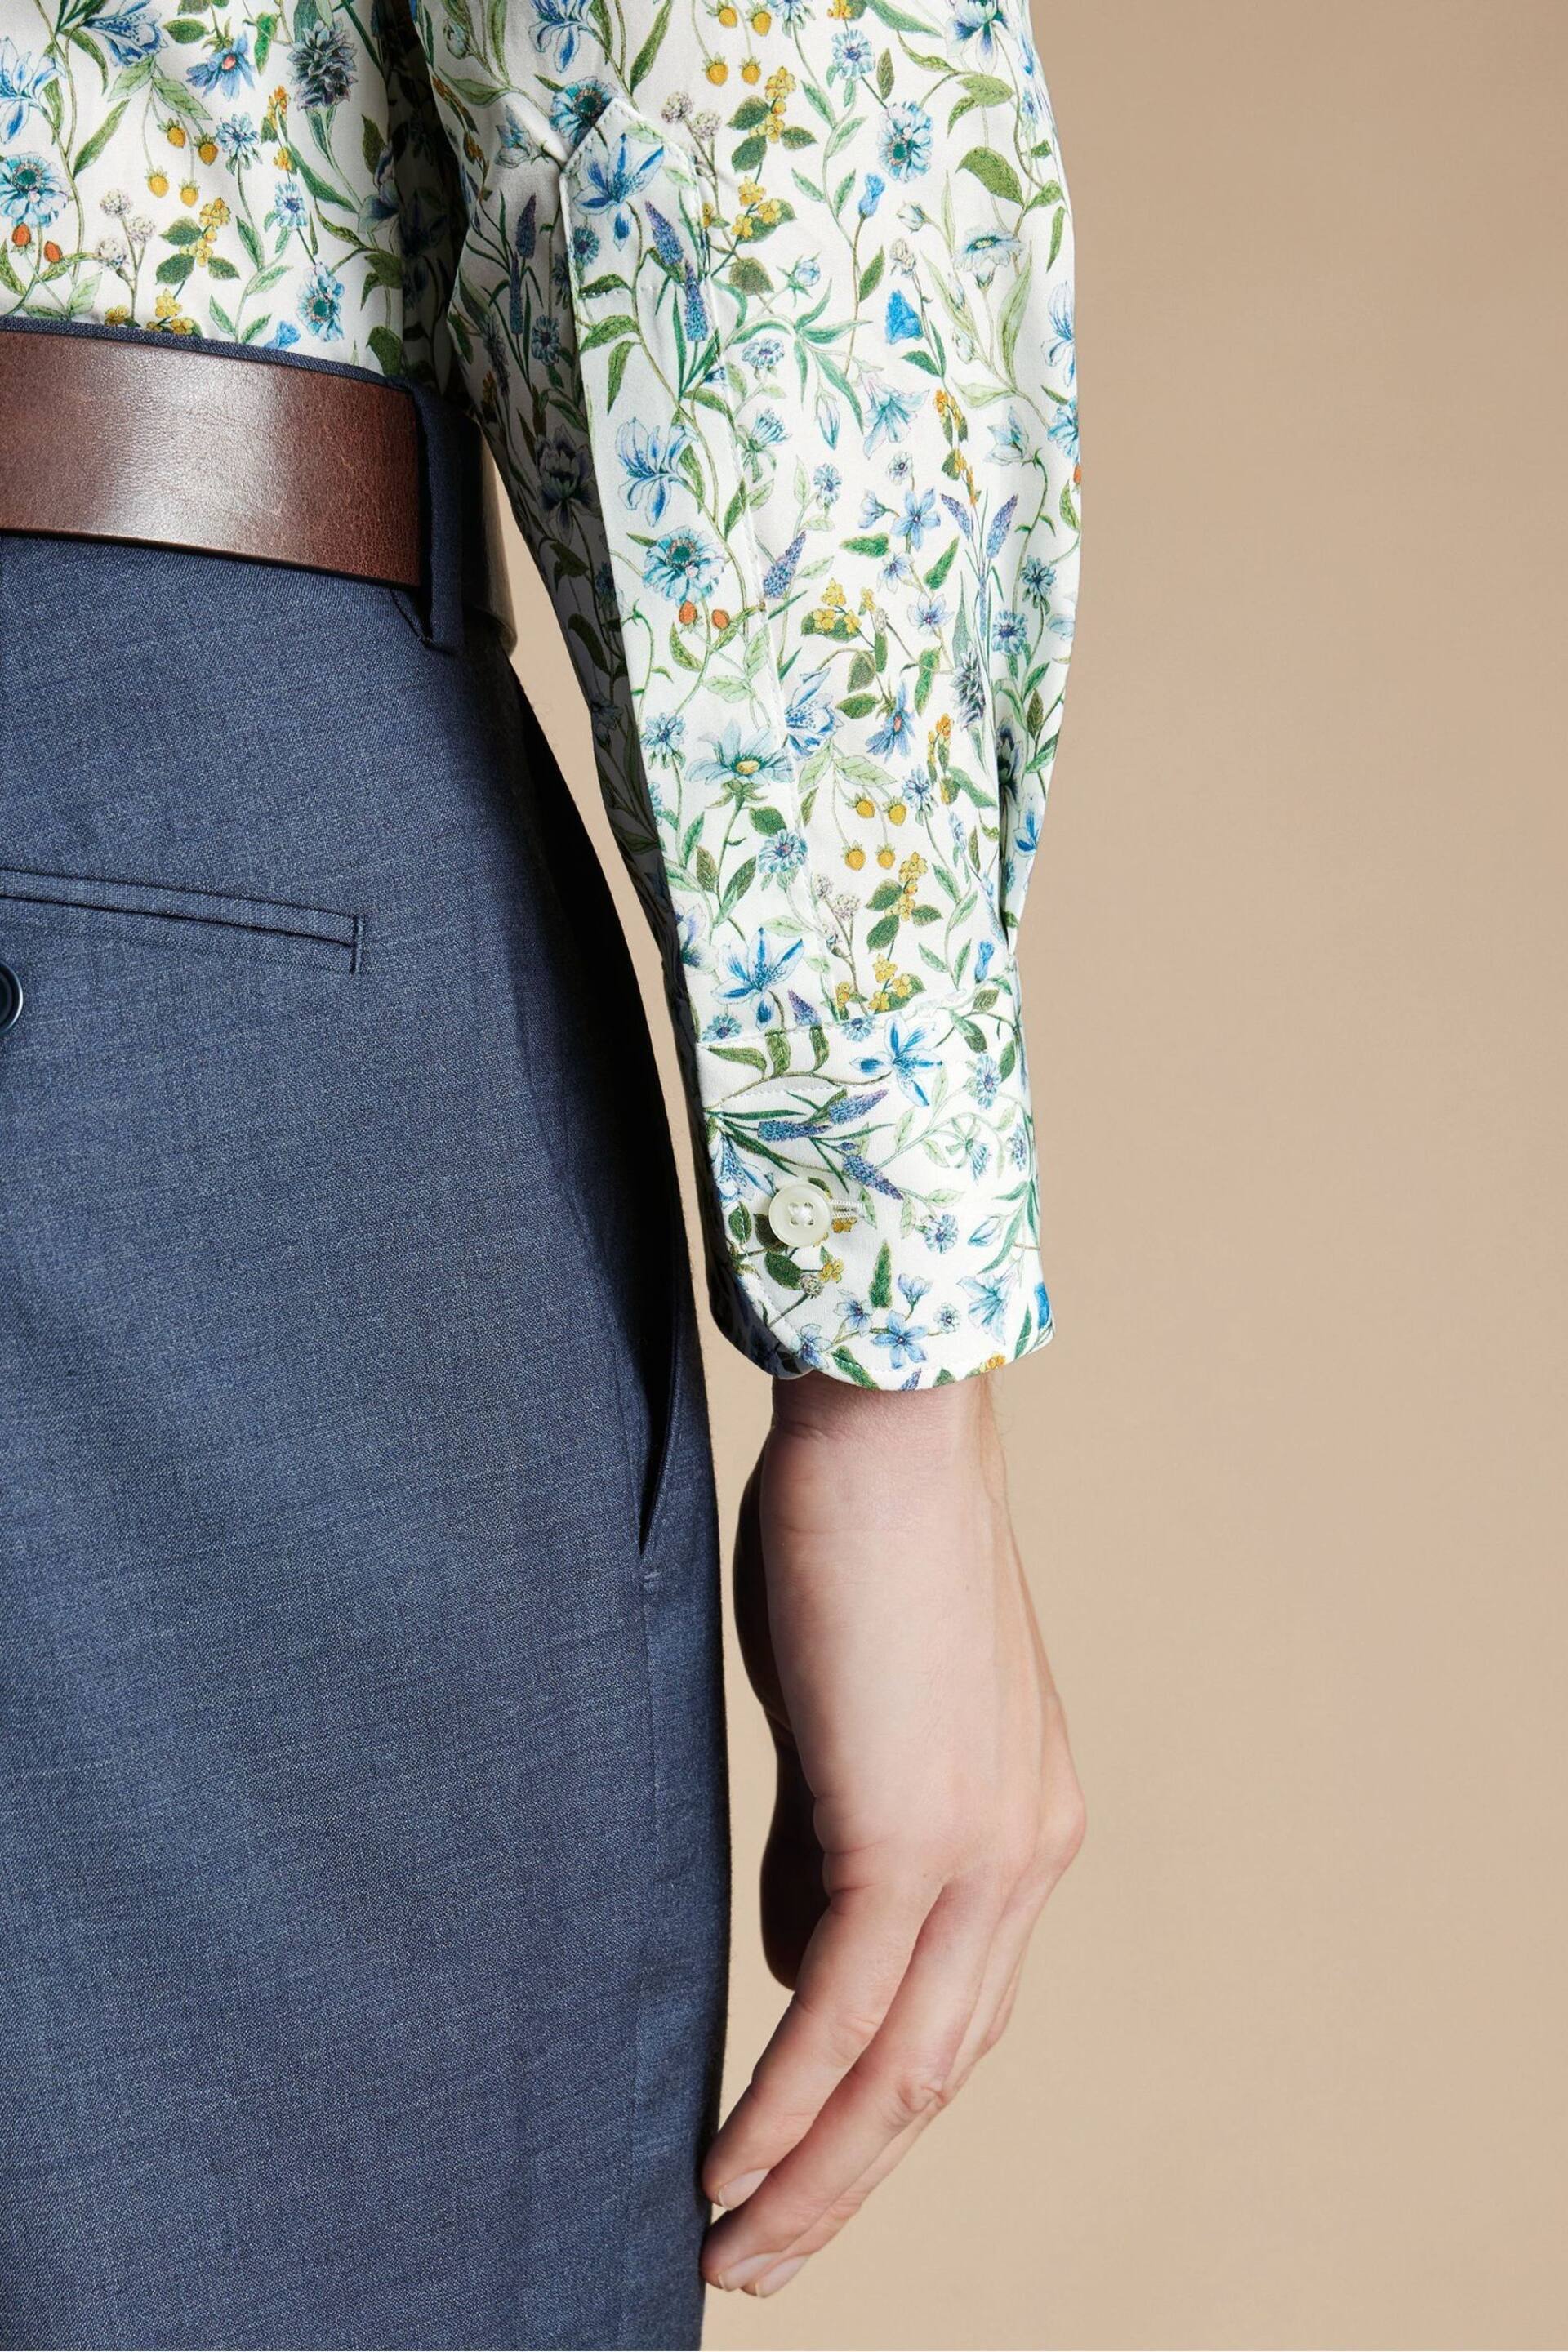 Charles Tyrwhitt Multi Slim Fit Liberty Fabric Floral Print Shirt - Image 3 of 6